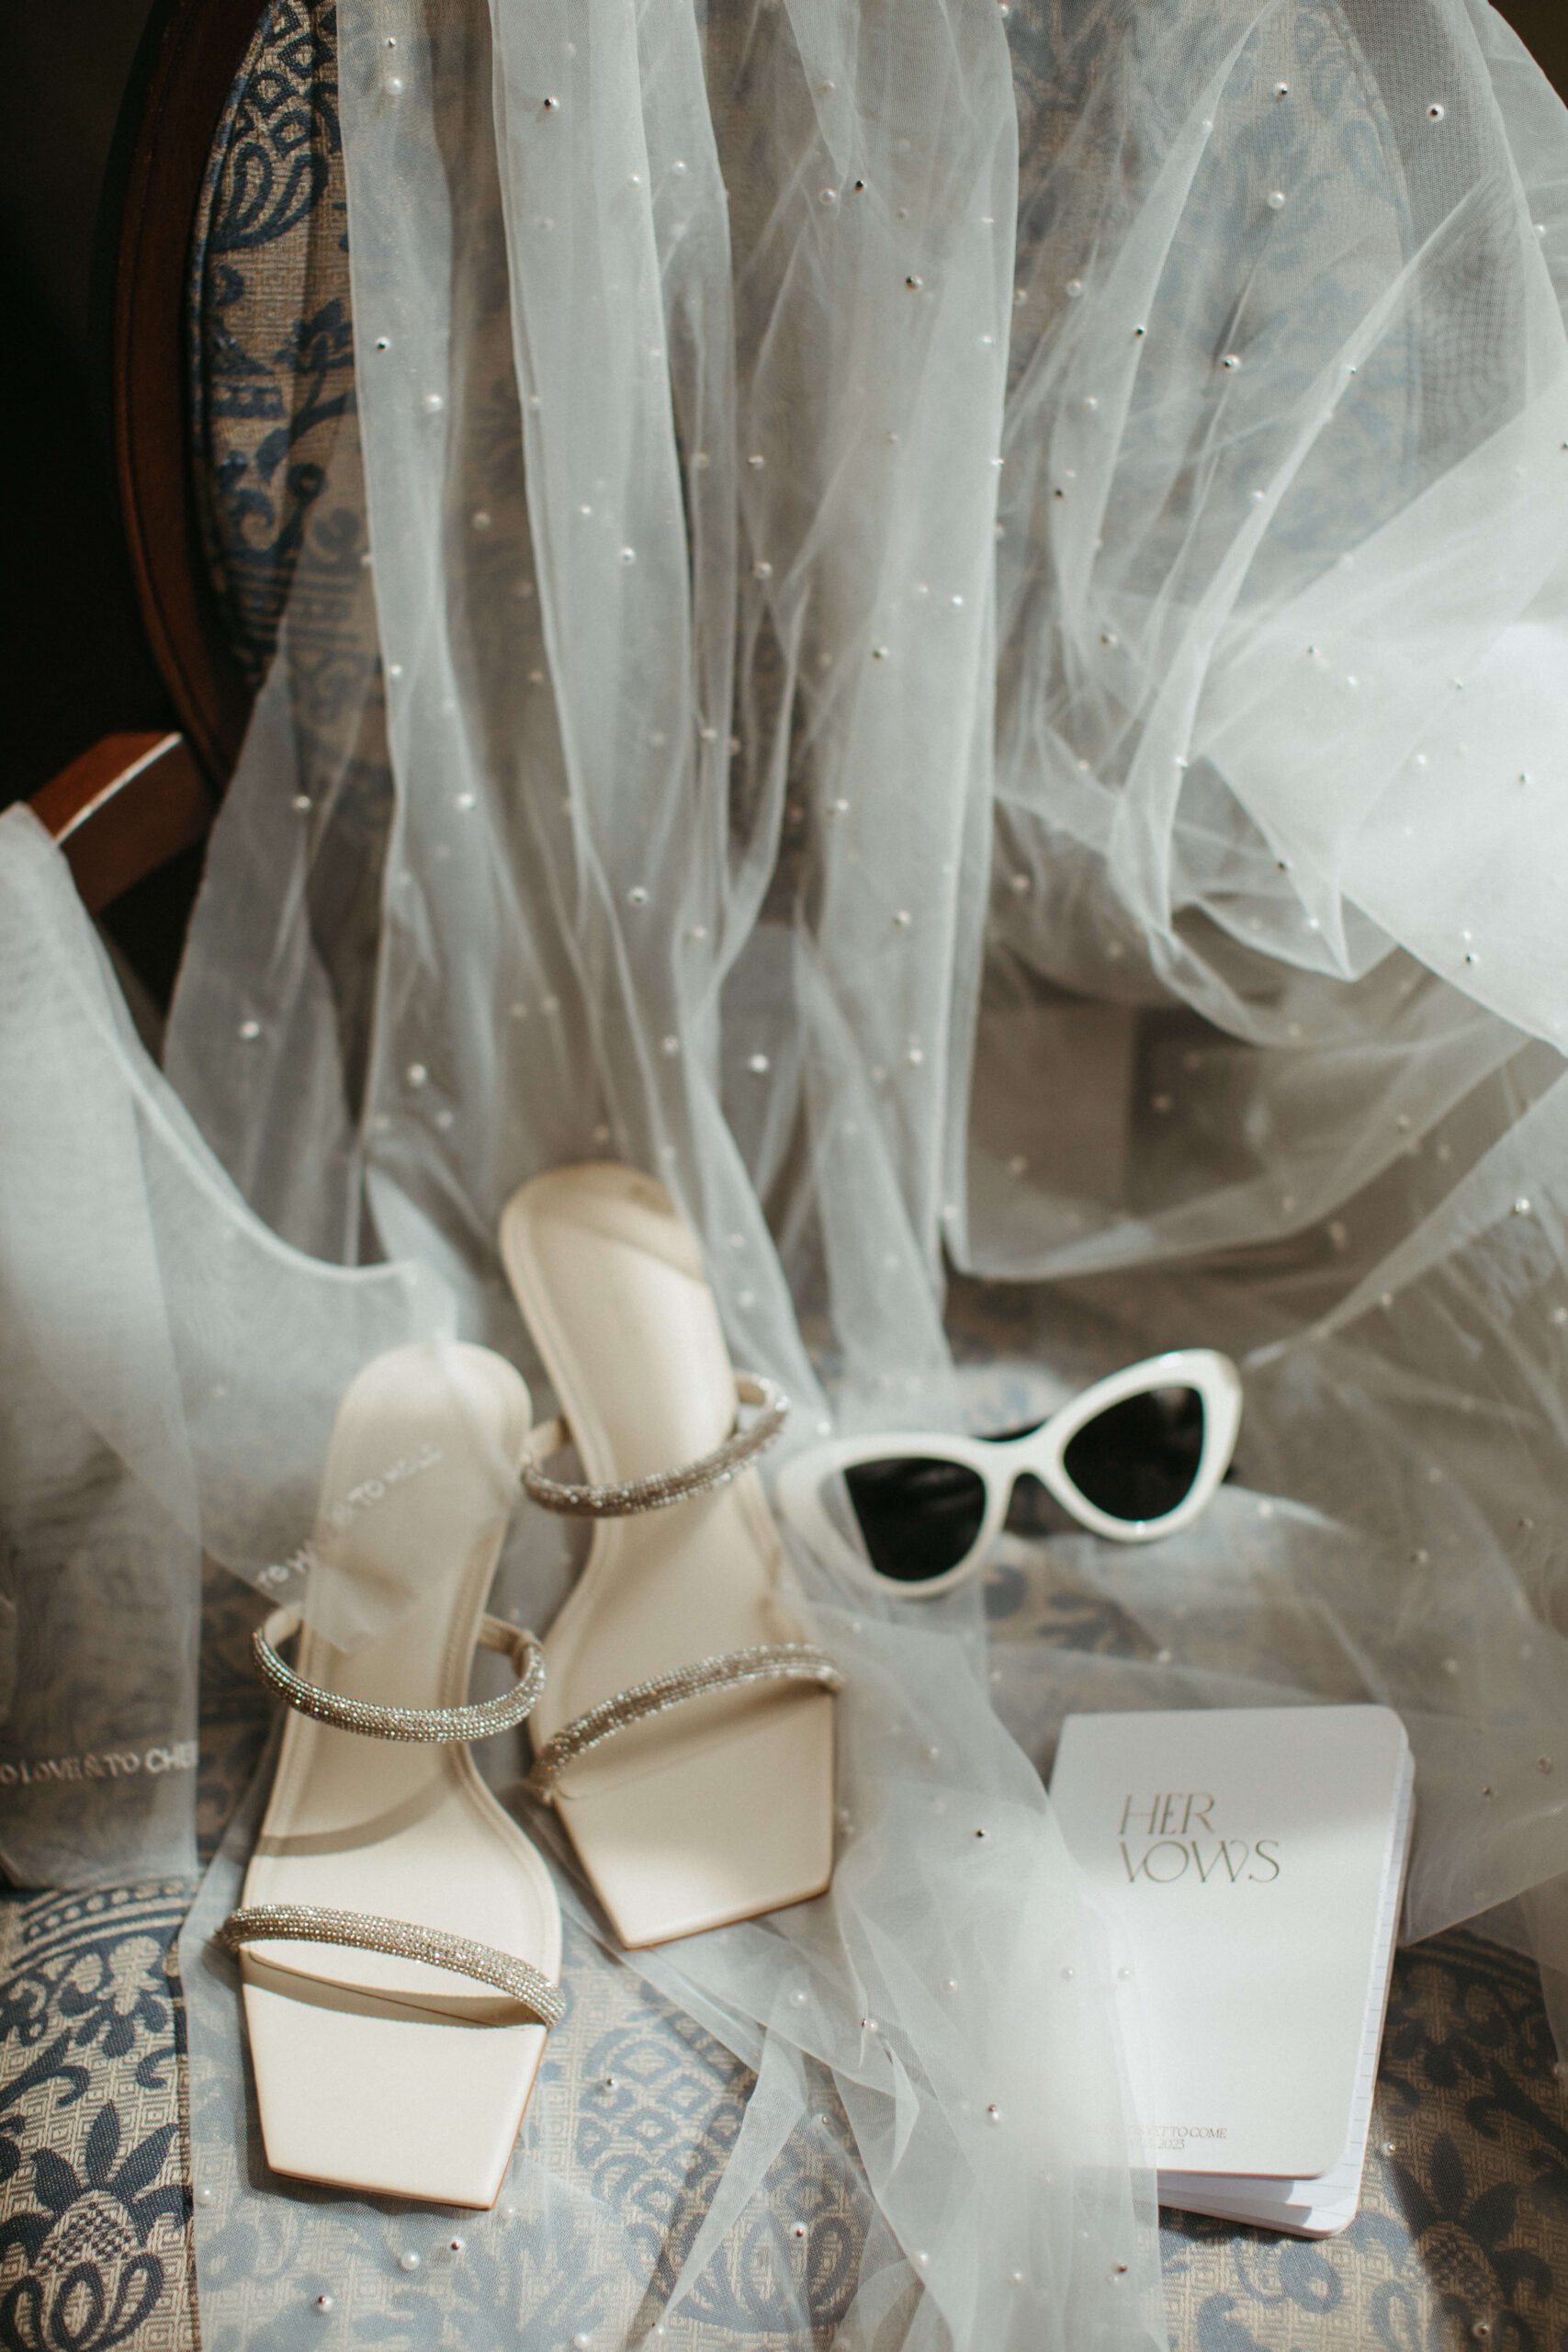 Bridal fashion accessories